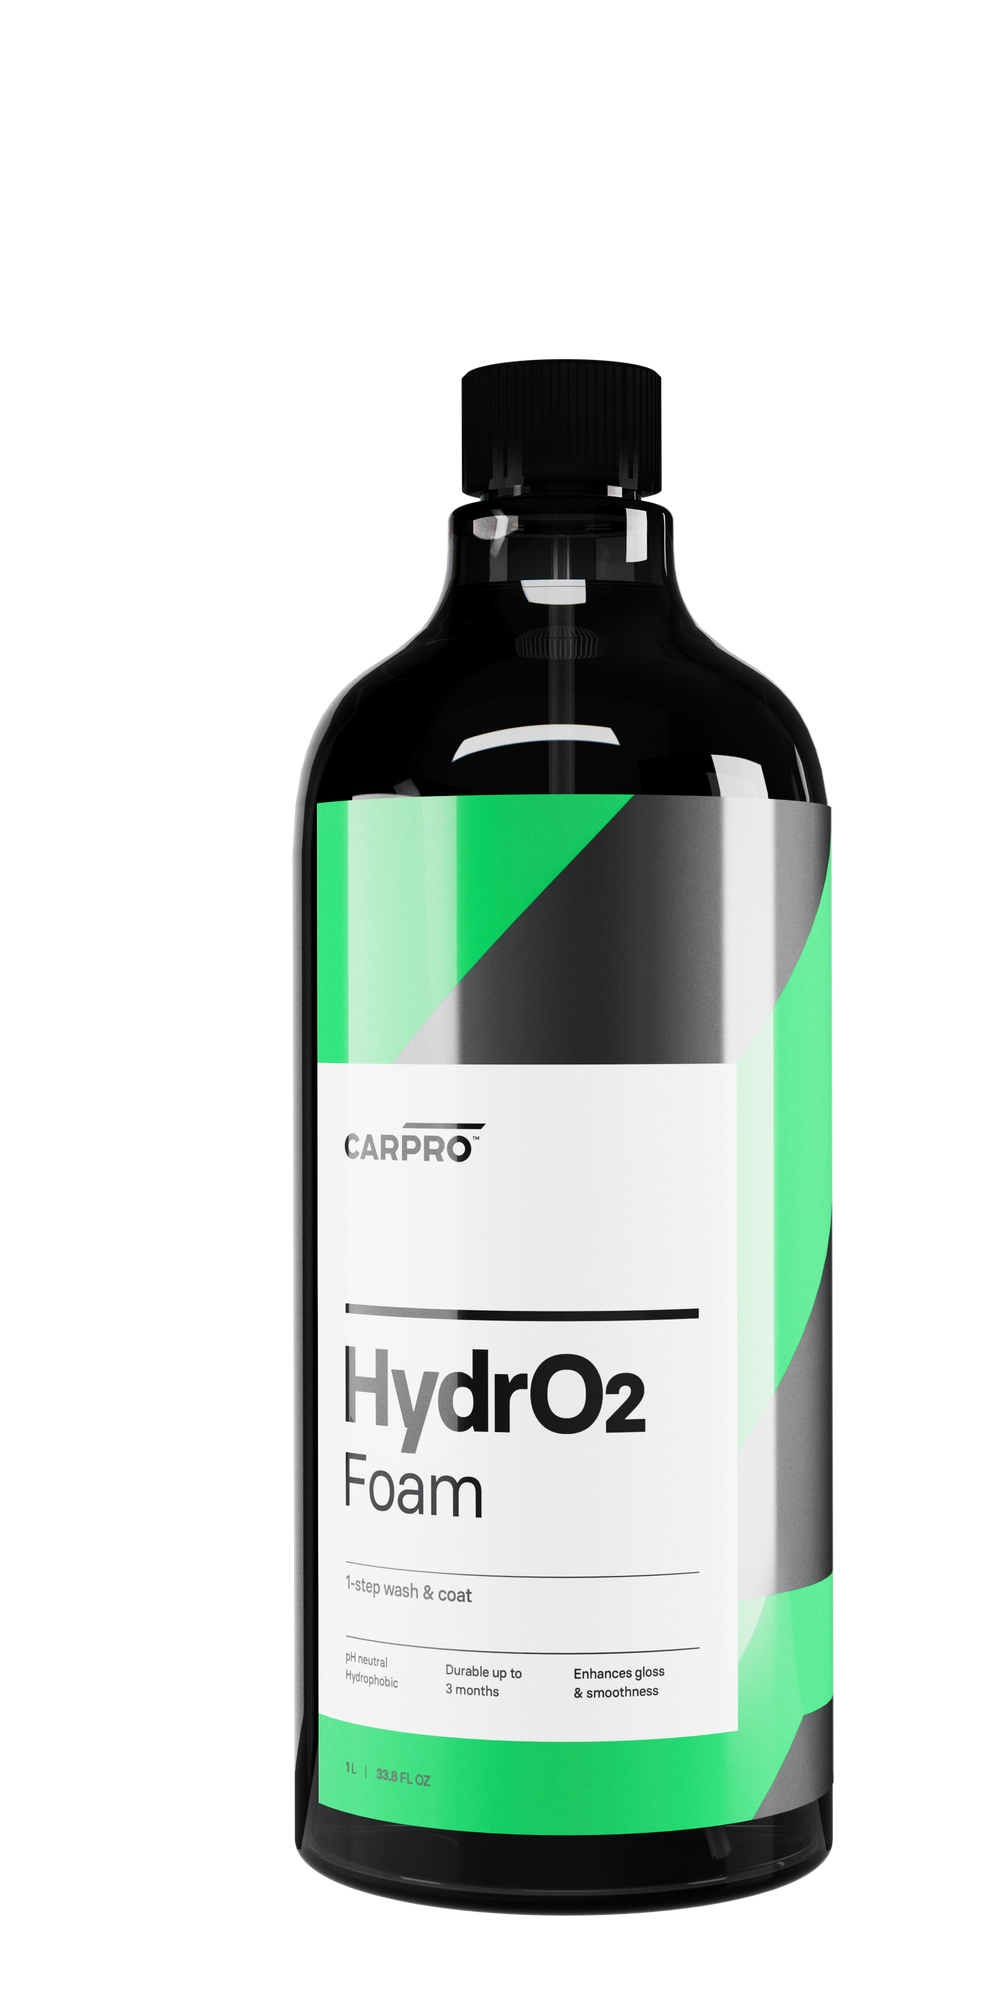 CARPRO Hydro2Foam 1L -1 step wash and coat